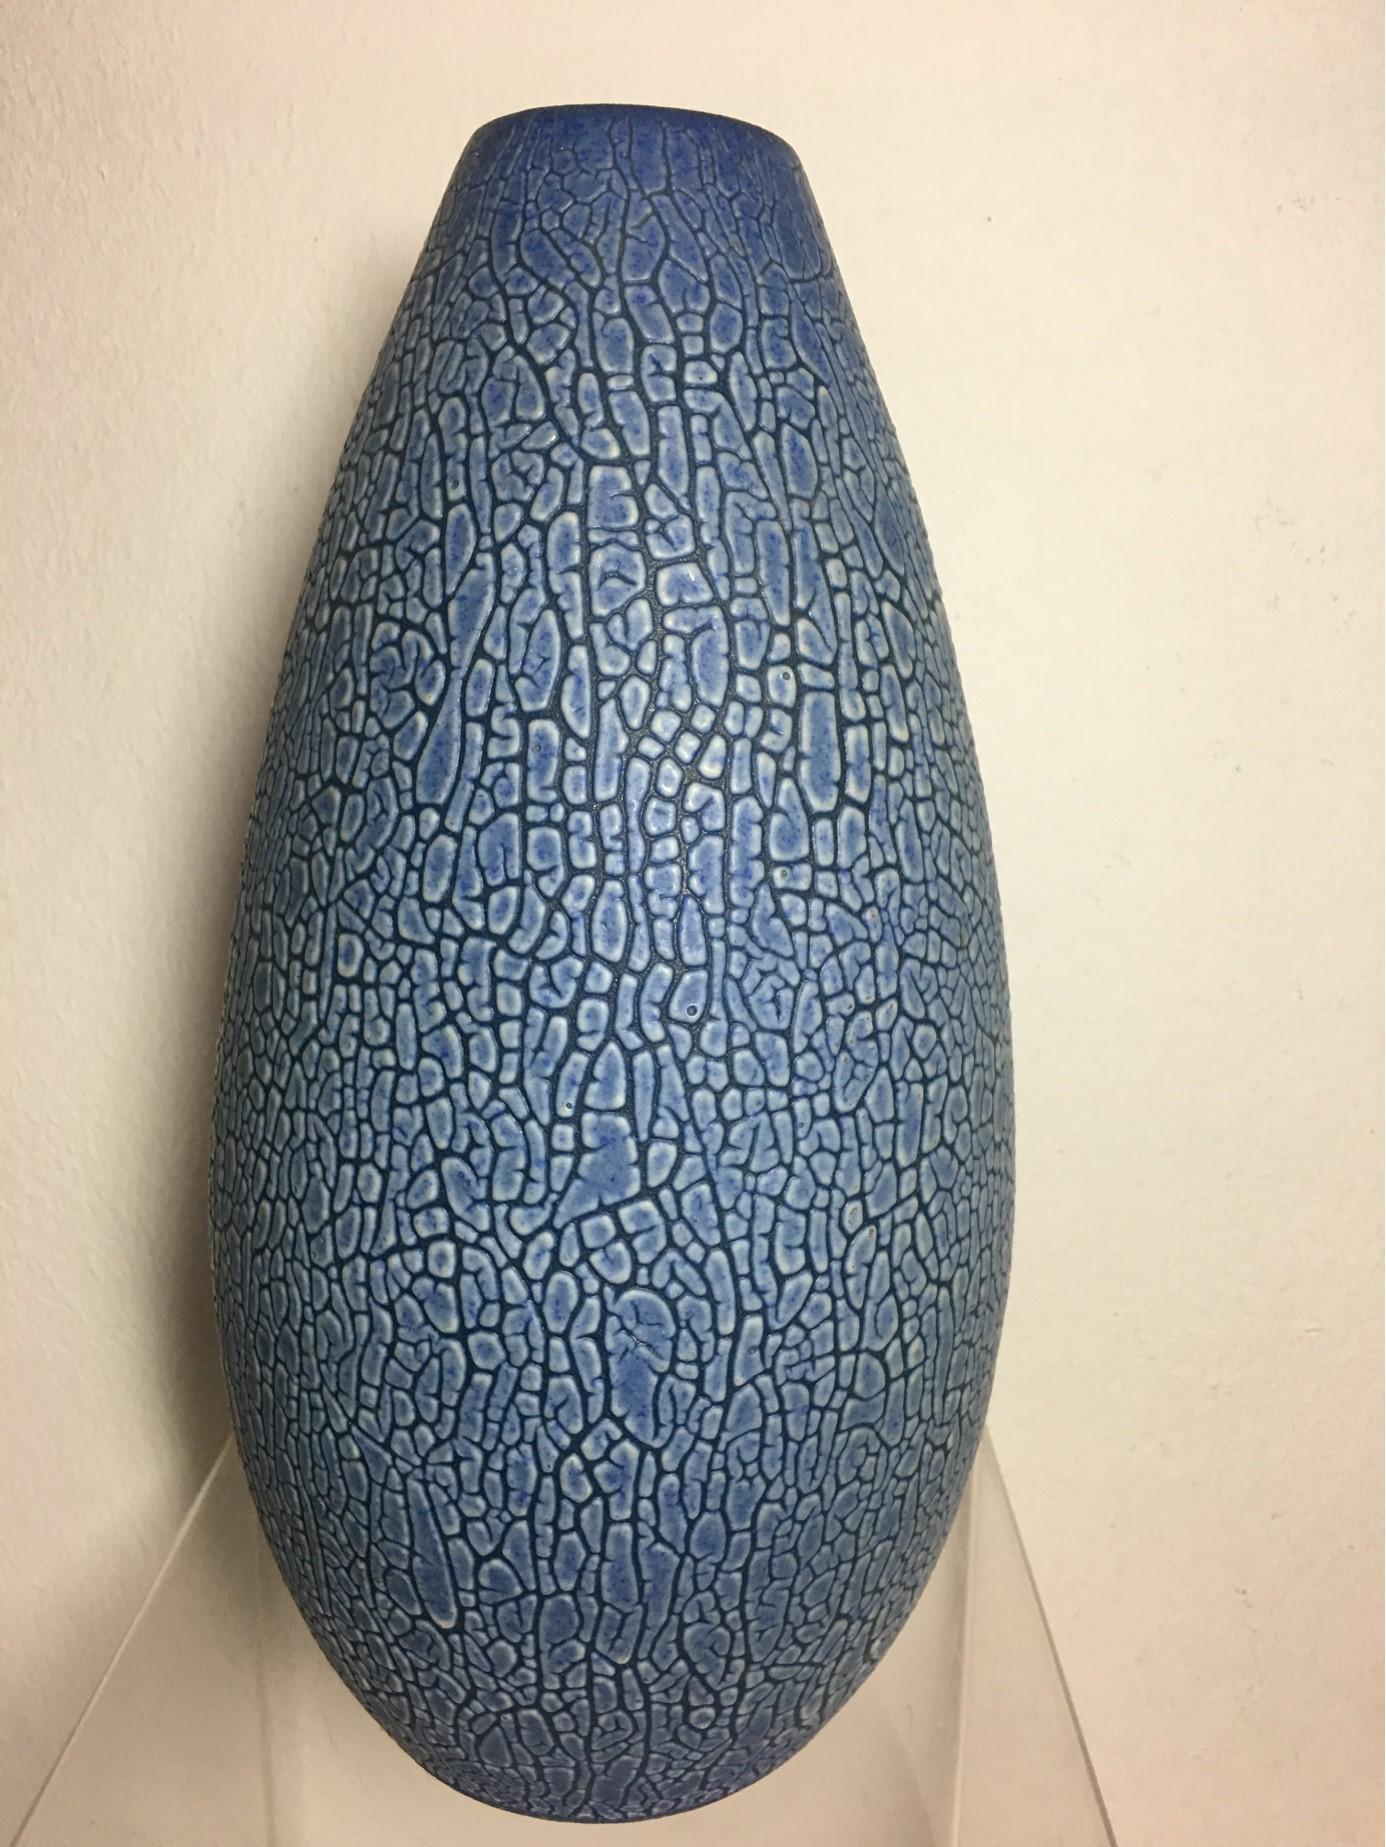 Reptile Skin Look Ceramic Vase from 1950s Germany For Sale 2